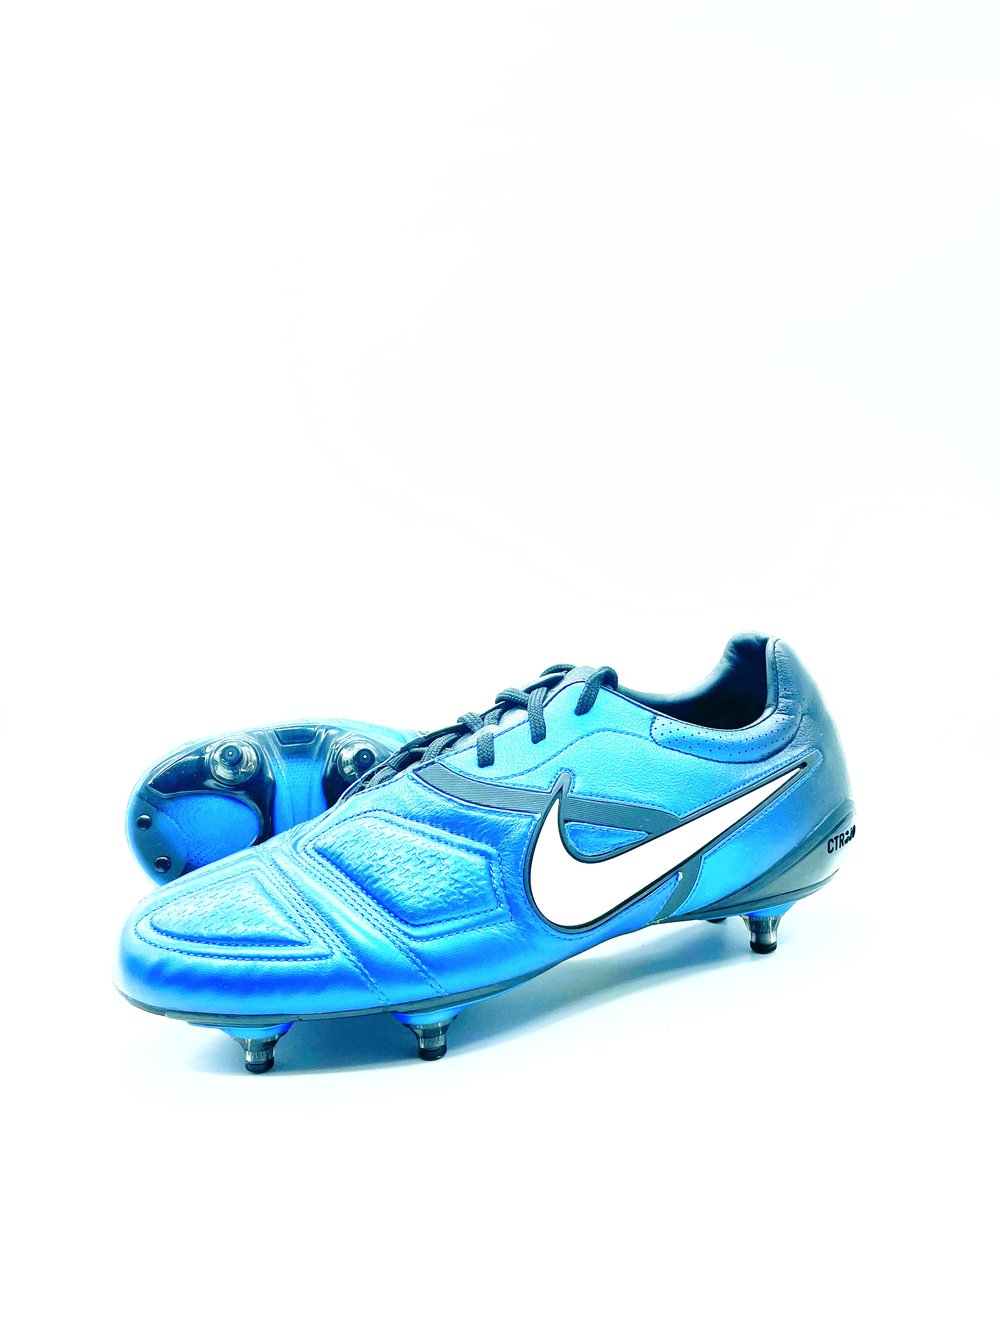 Image of Nike Ctr360 Tre Sg blue 